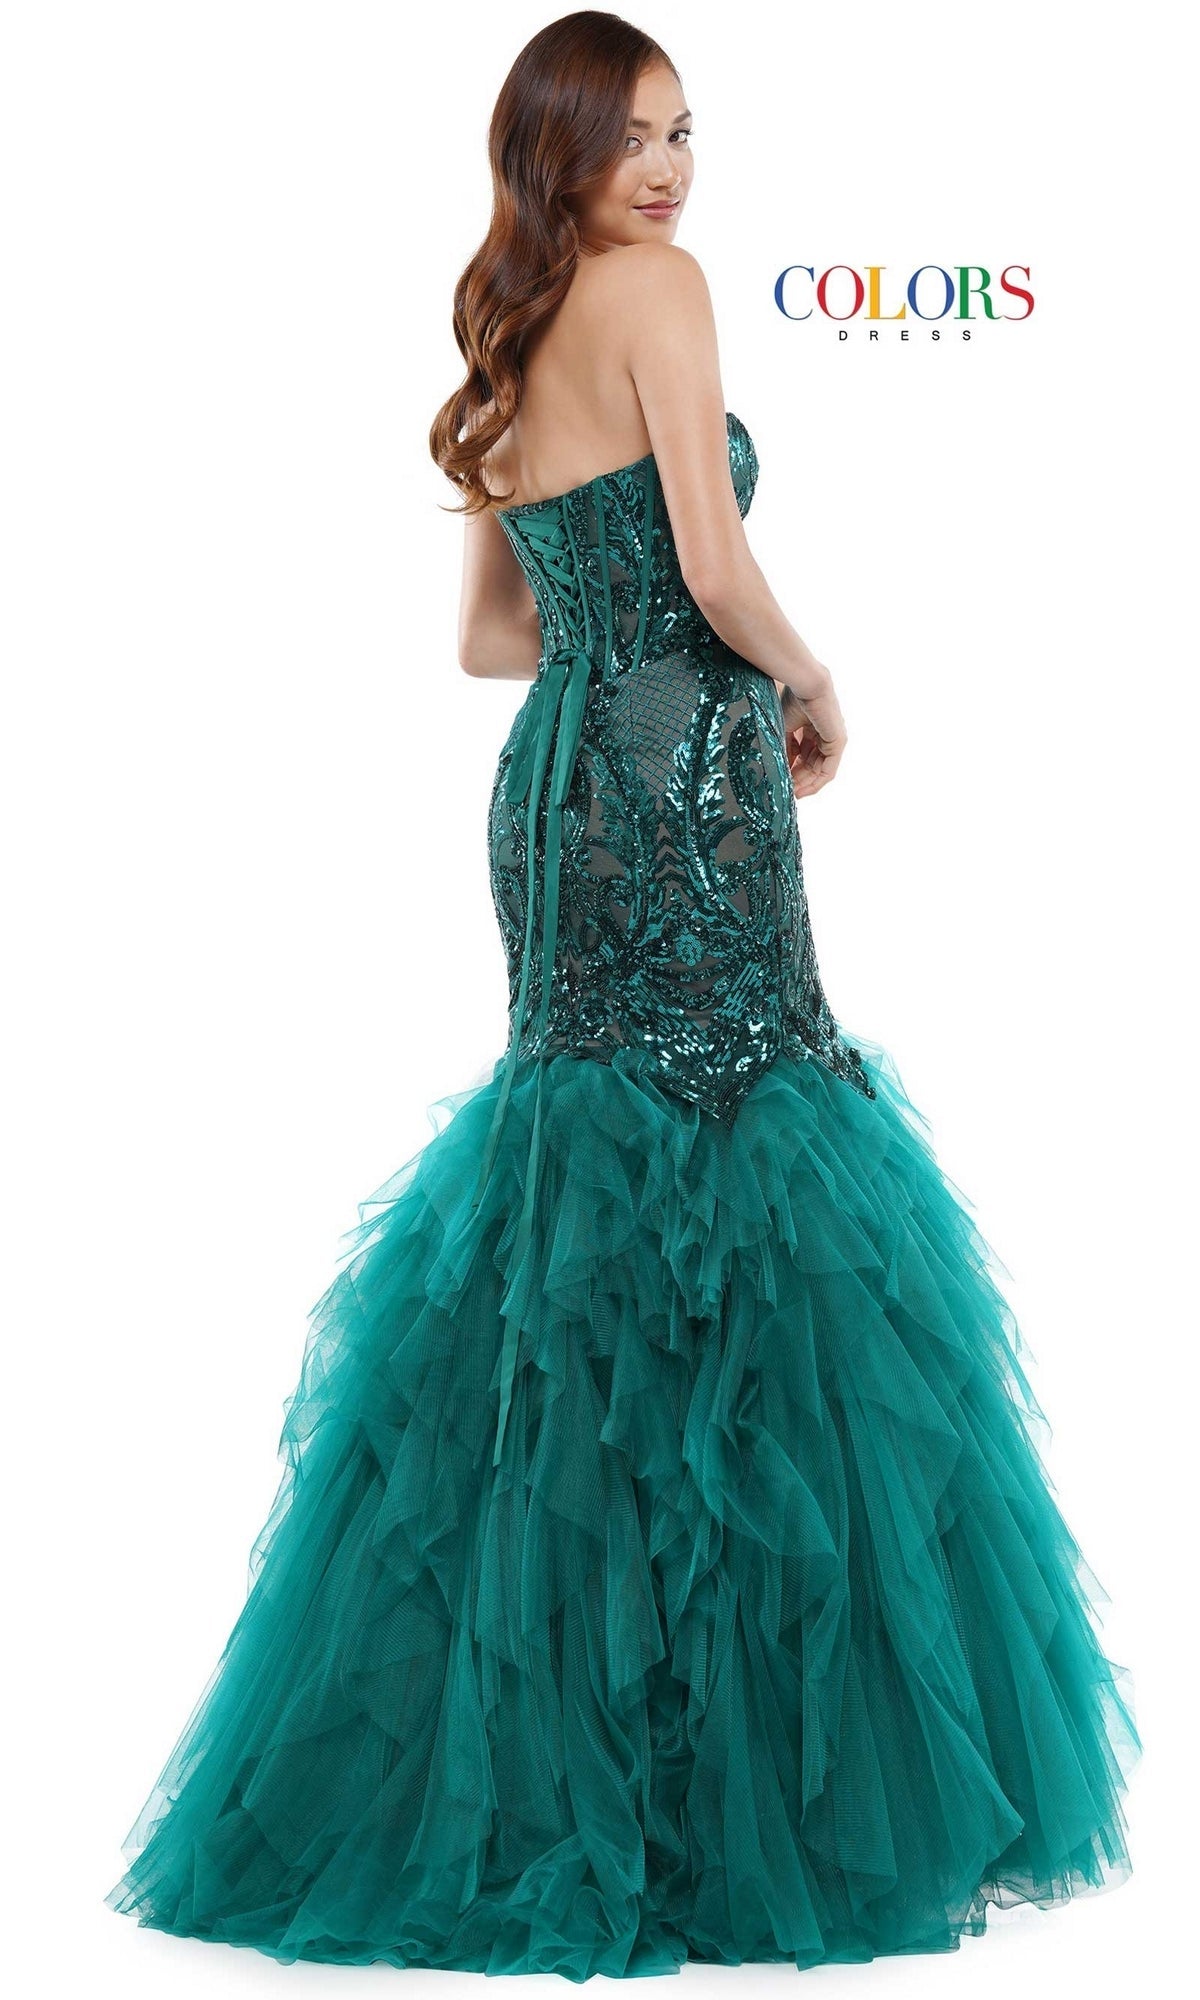  Colors Dress 2067 Formal Prom Dress